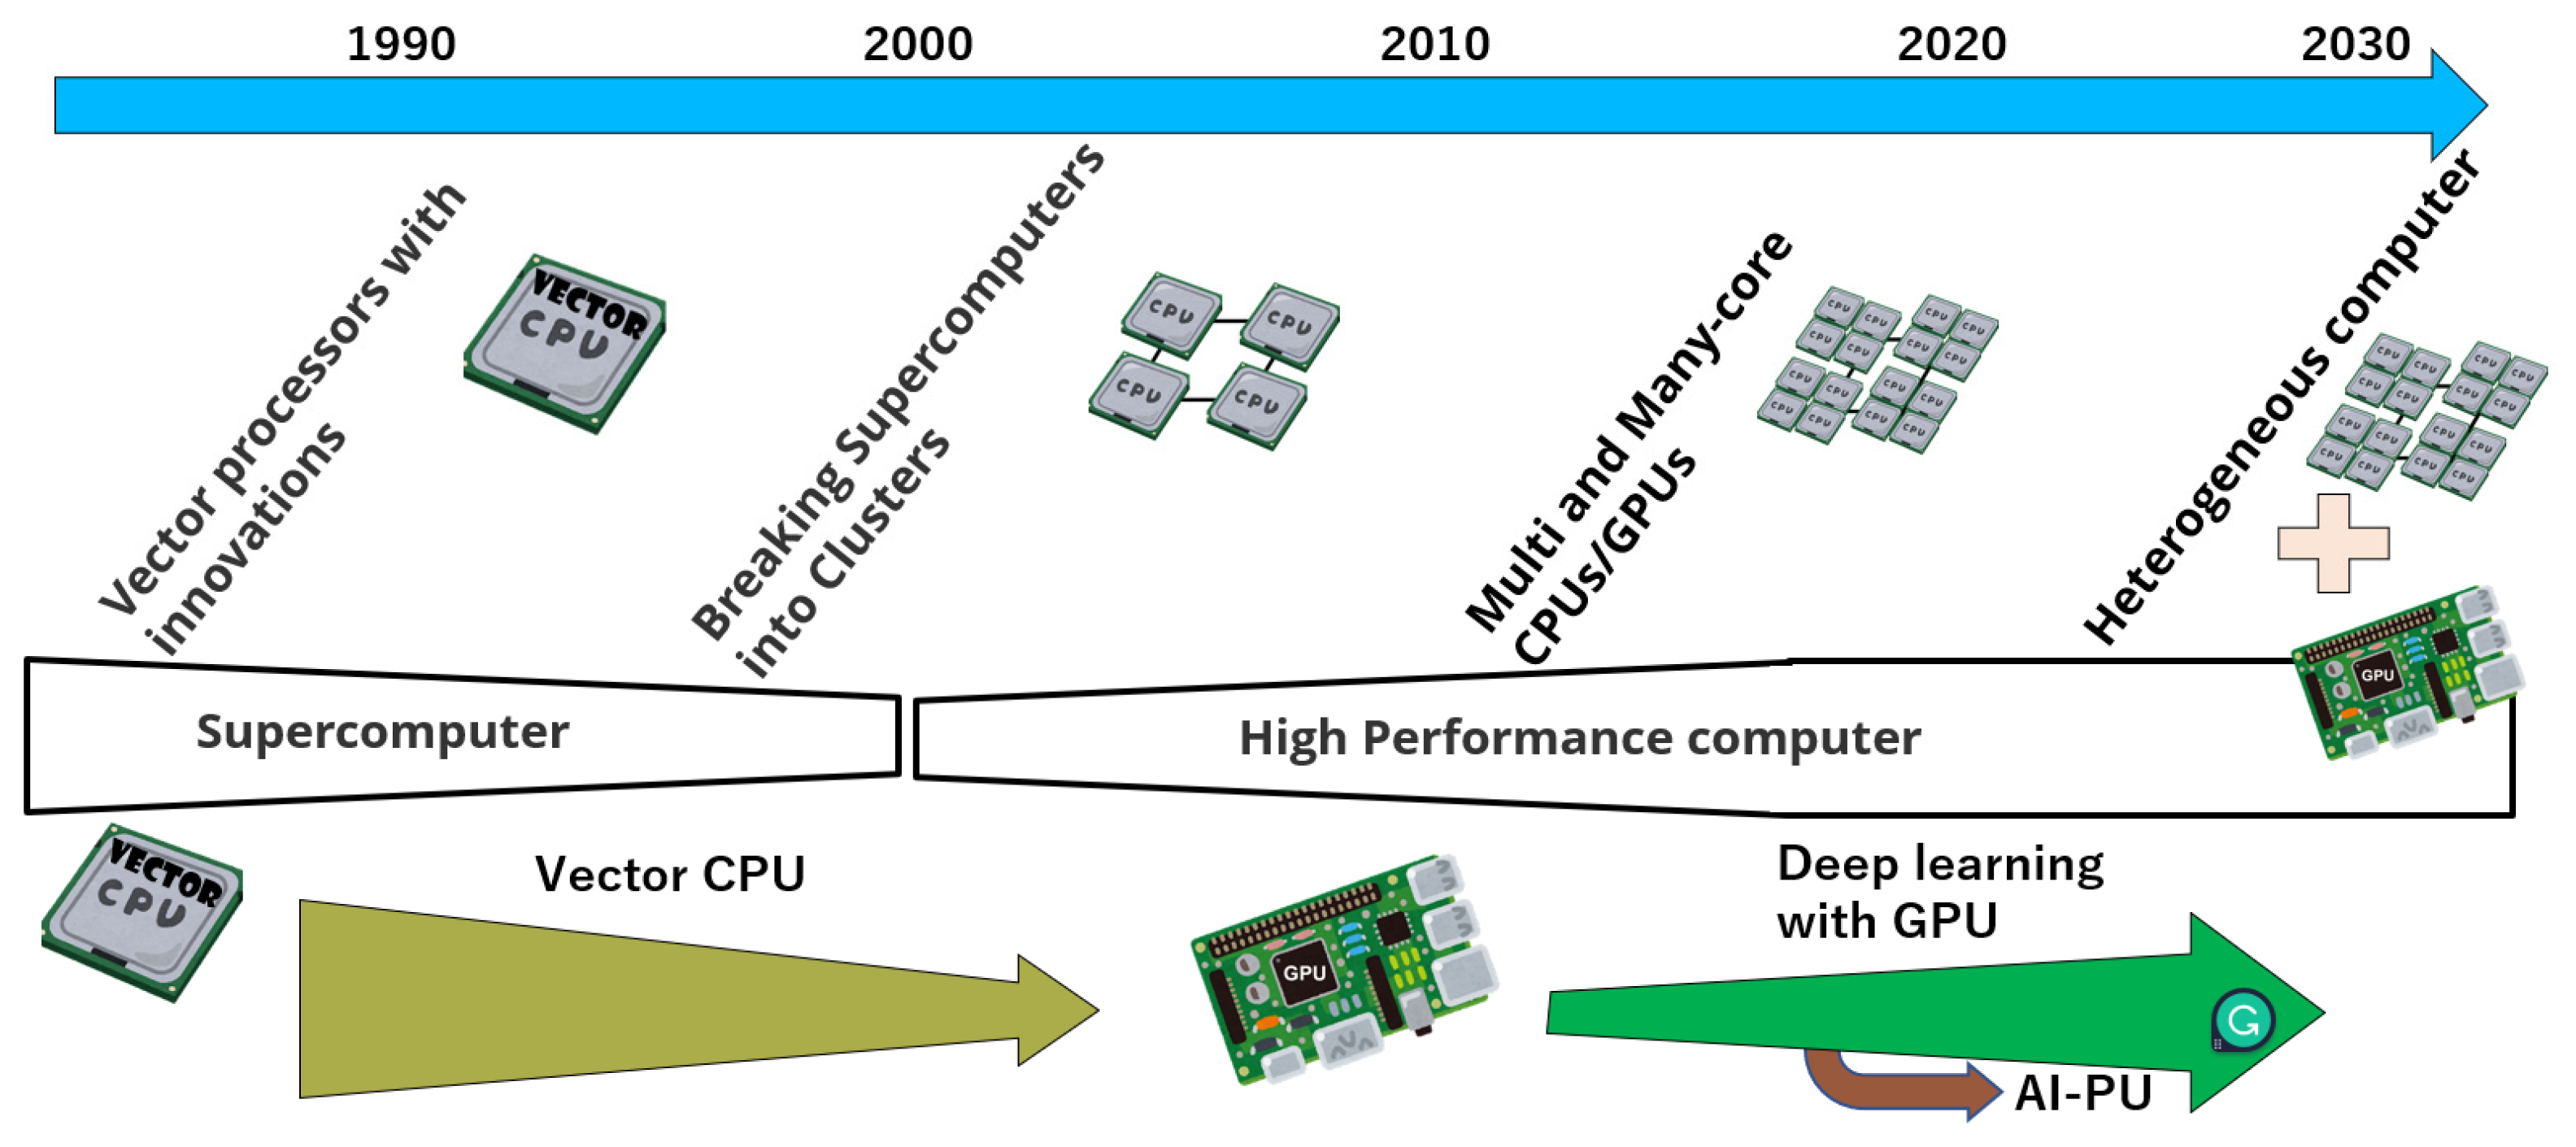 Hardware, Supercomputers and Performance Computing